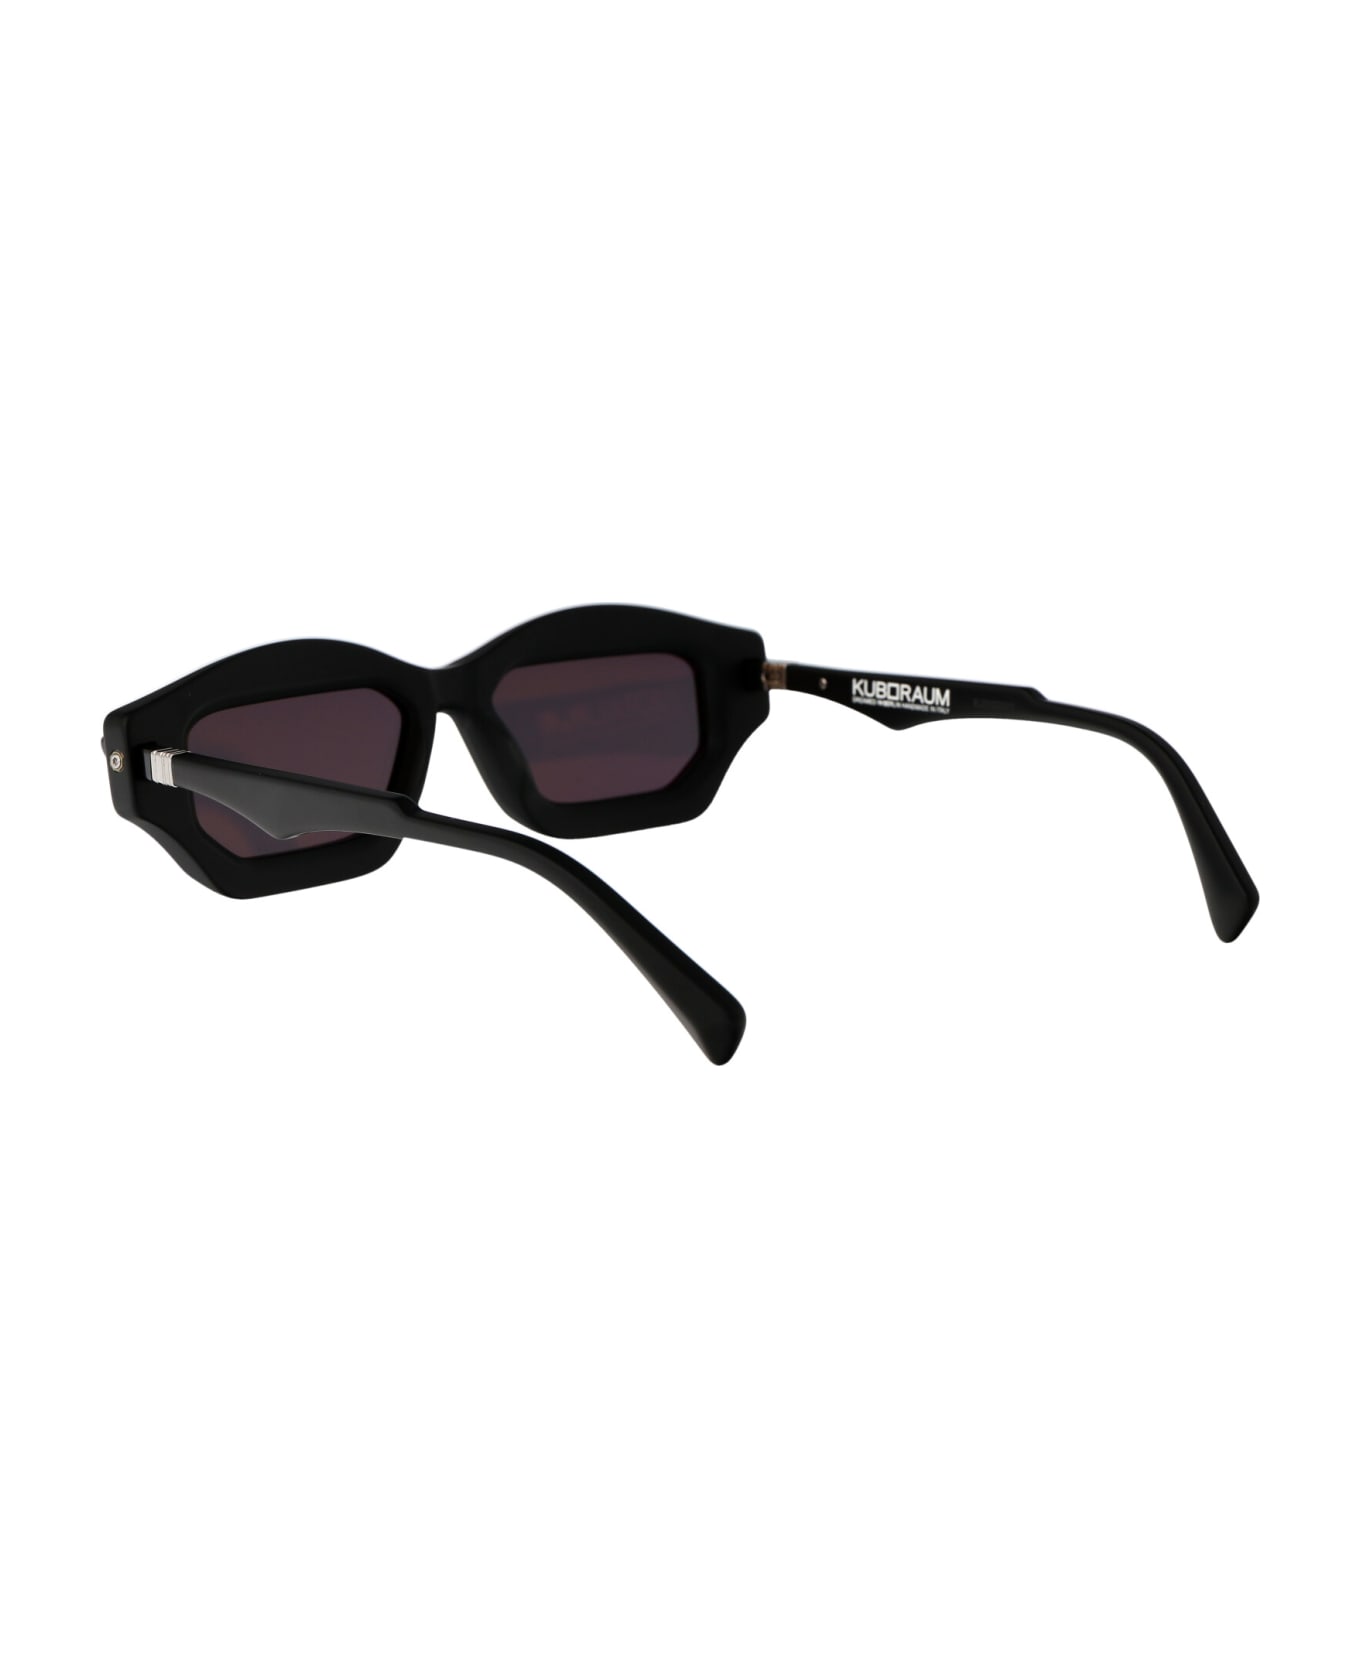 Kuboraum Maske Q6 Sunglasses - BMM black